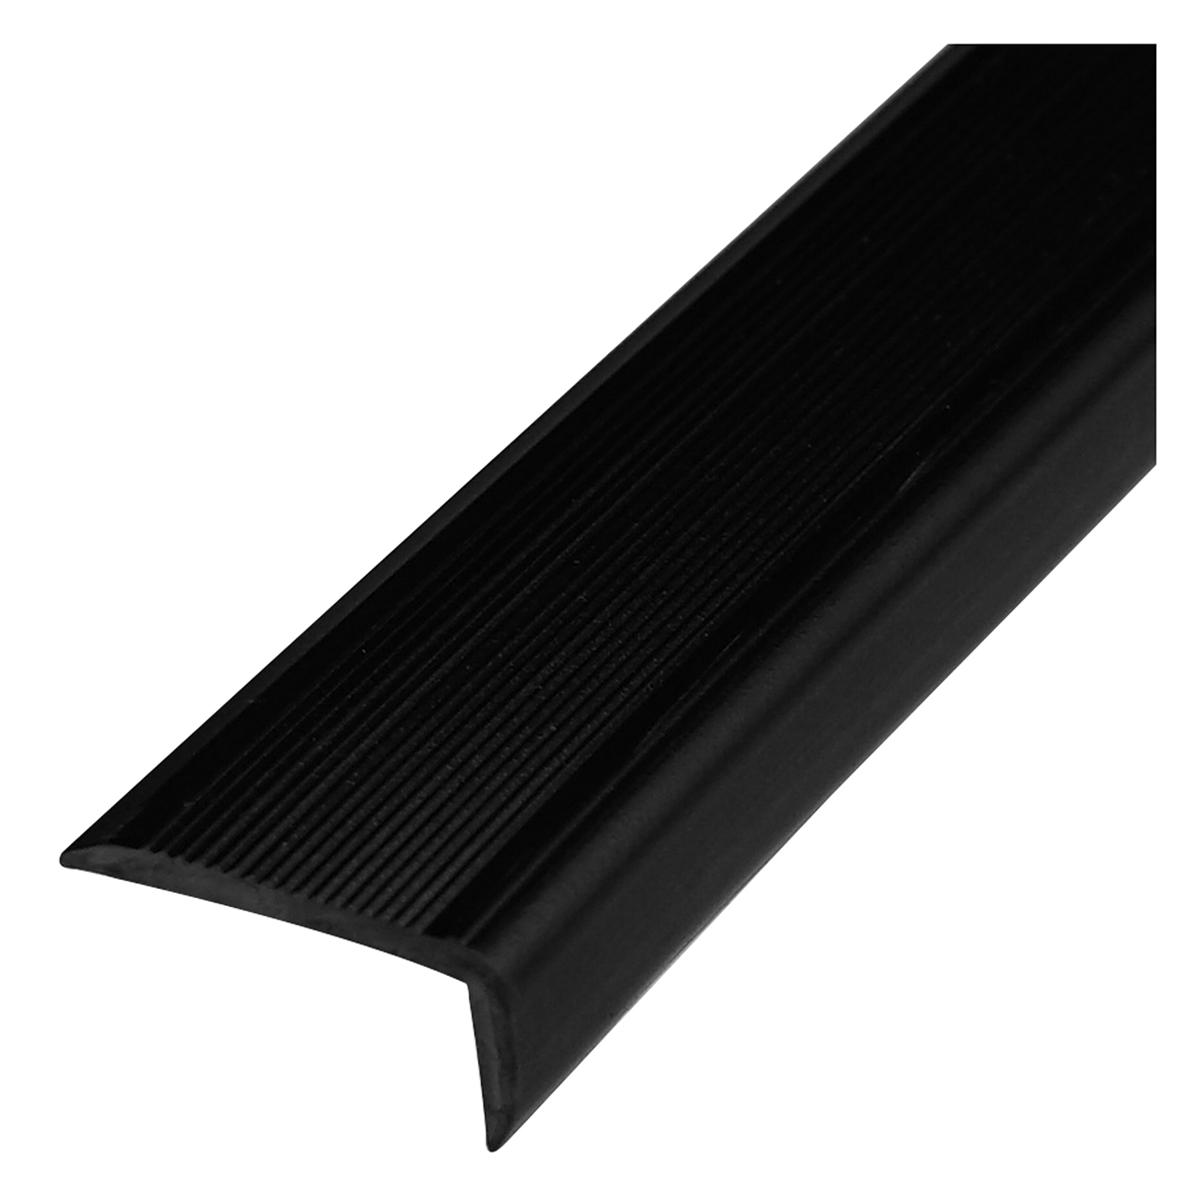 Perfil Antideslizante L Para Escaleras Pvc - Negro - 4.5X100 cm